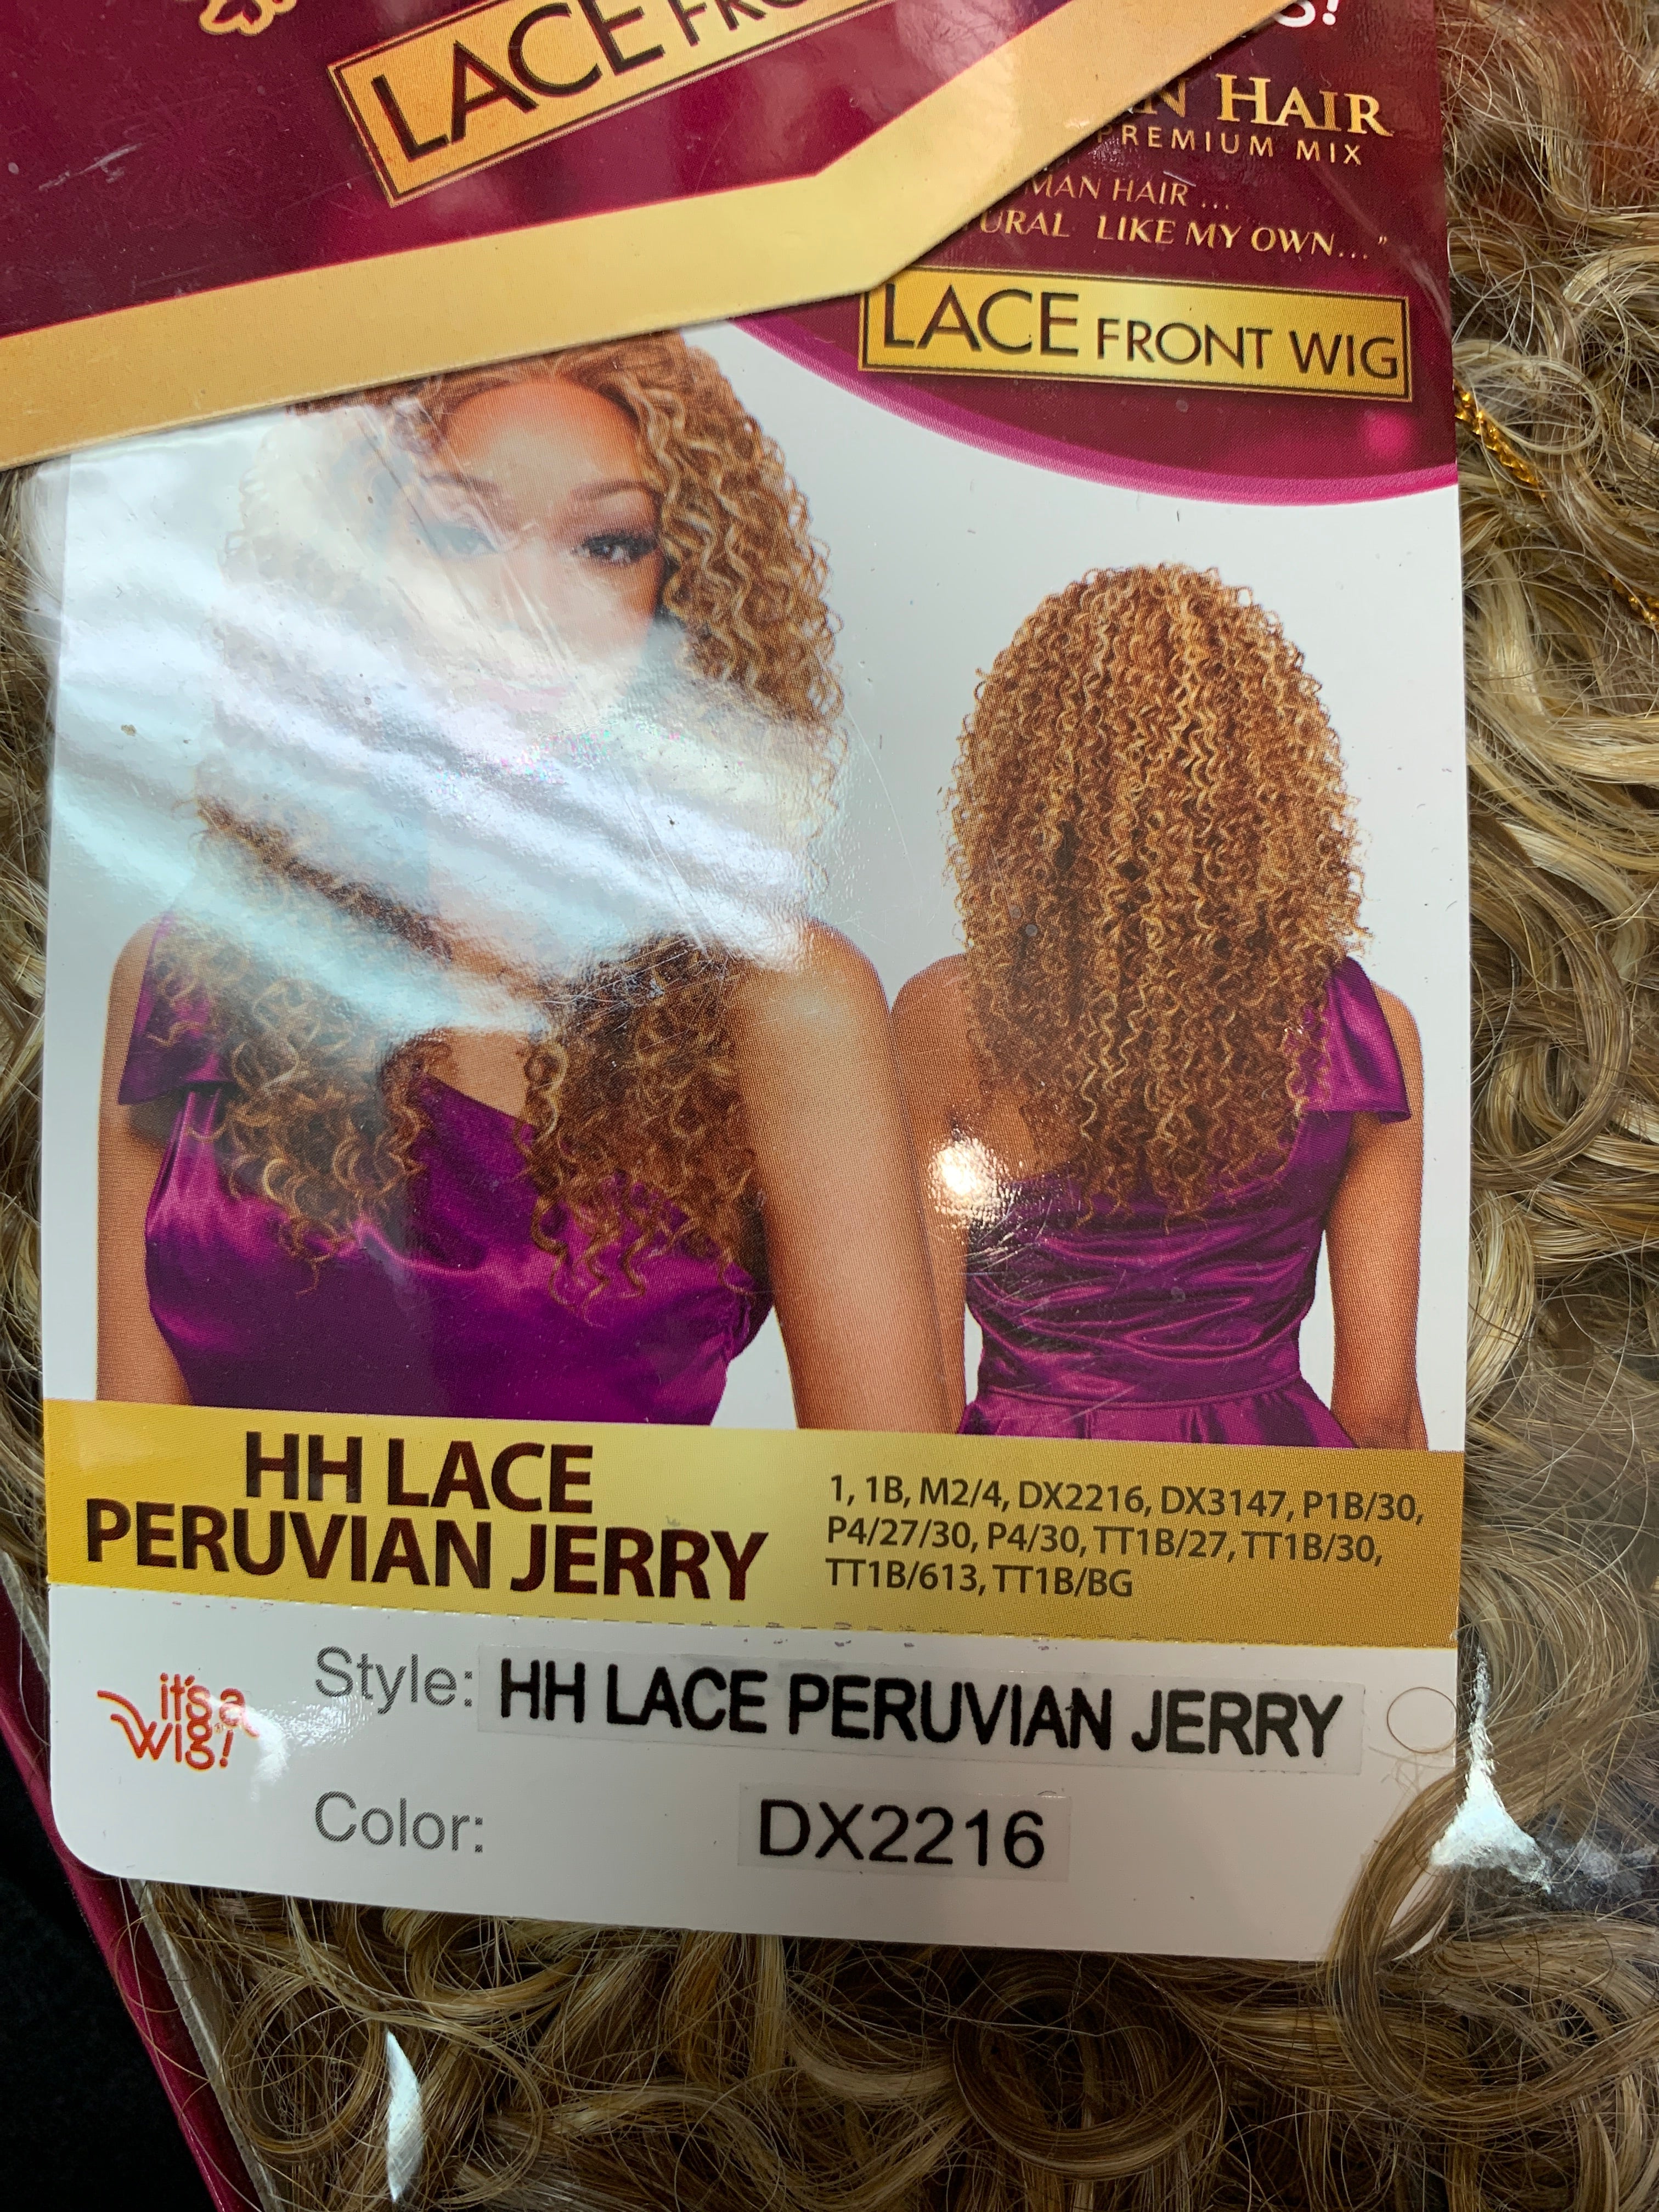 It’s a wig hh lace Peruvian jerry